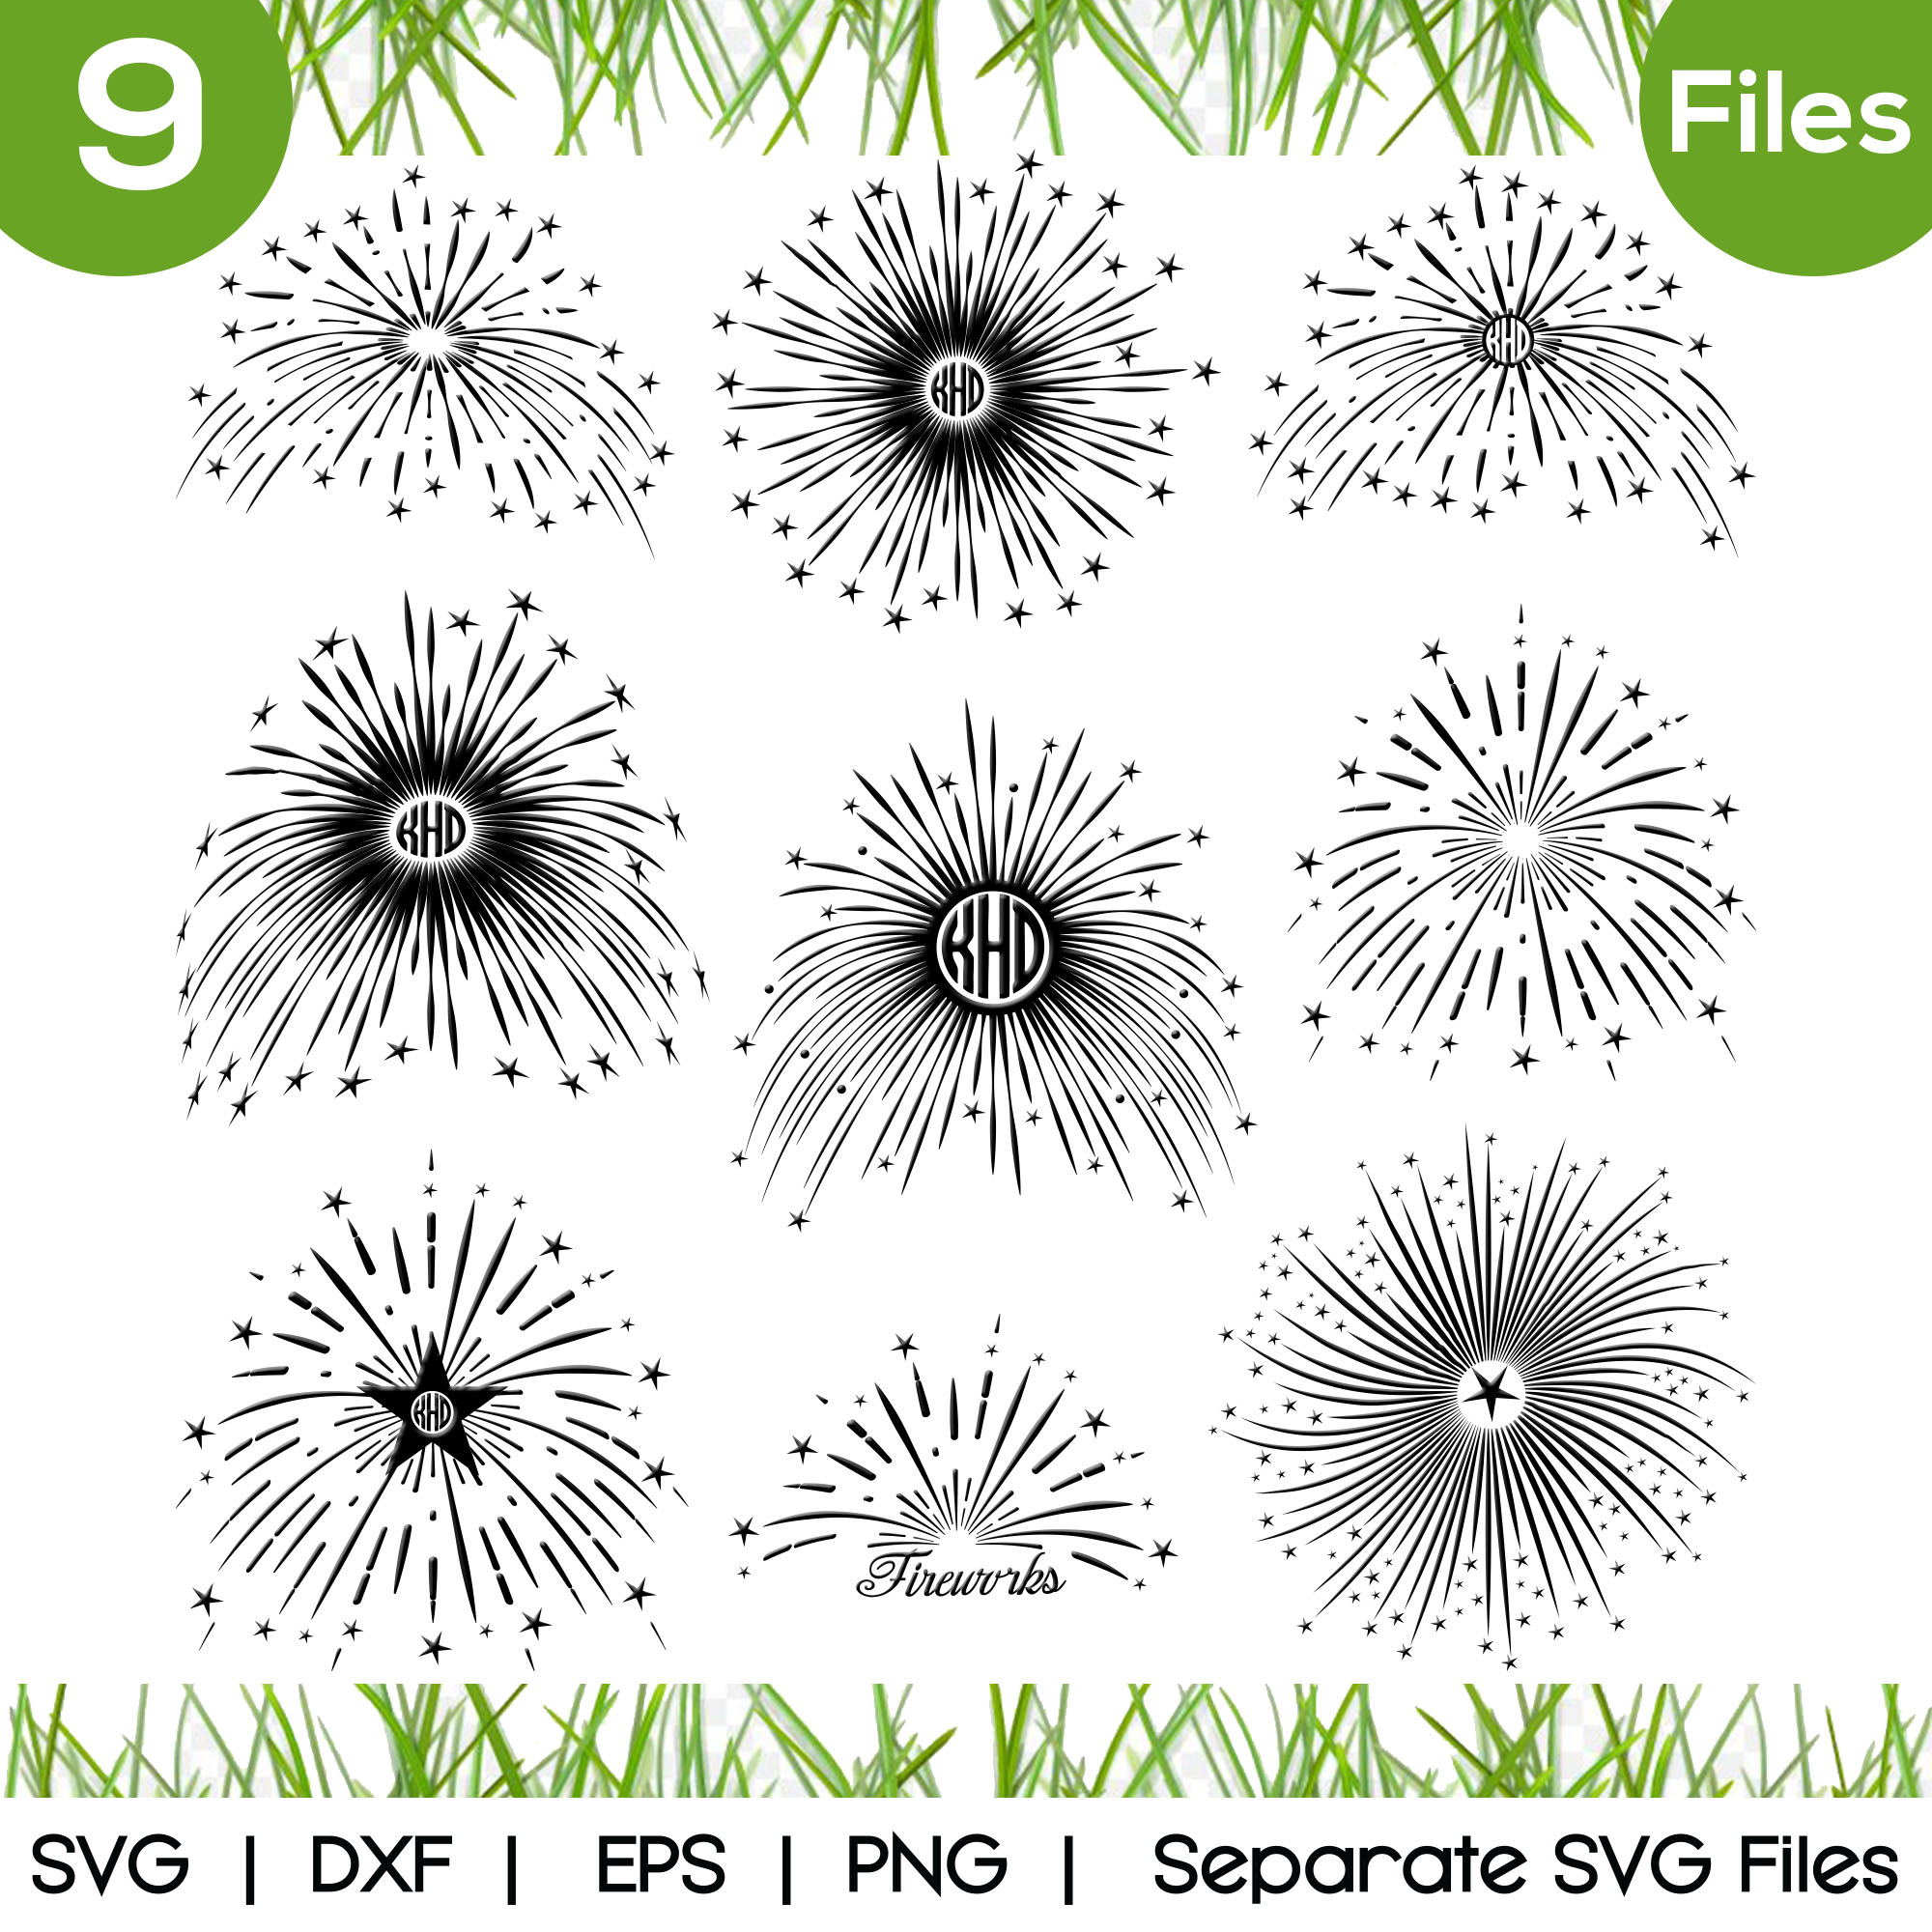 Download Fireworks 4th of july SVG Cut Files - vector svg format